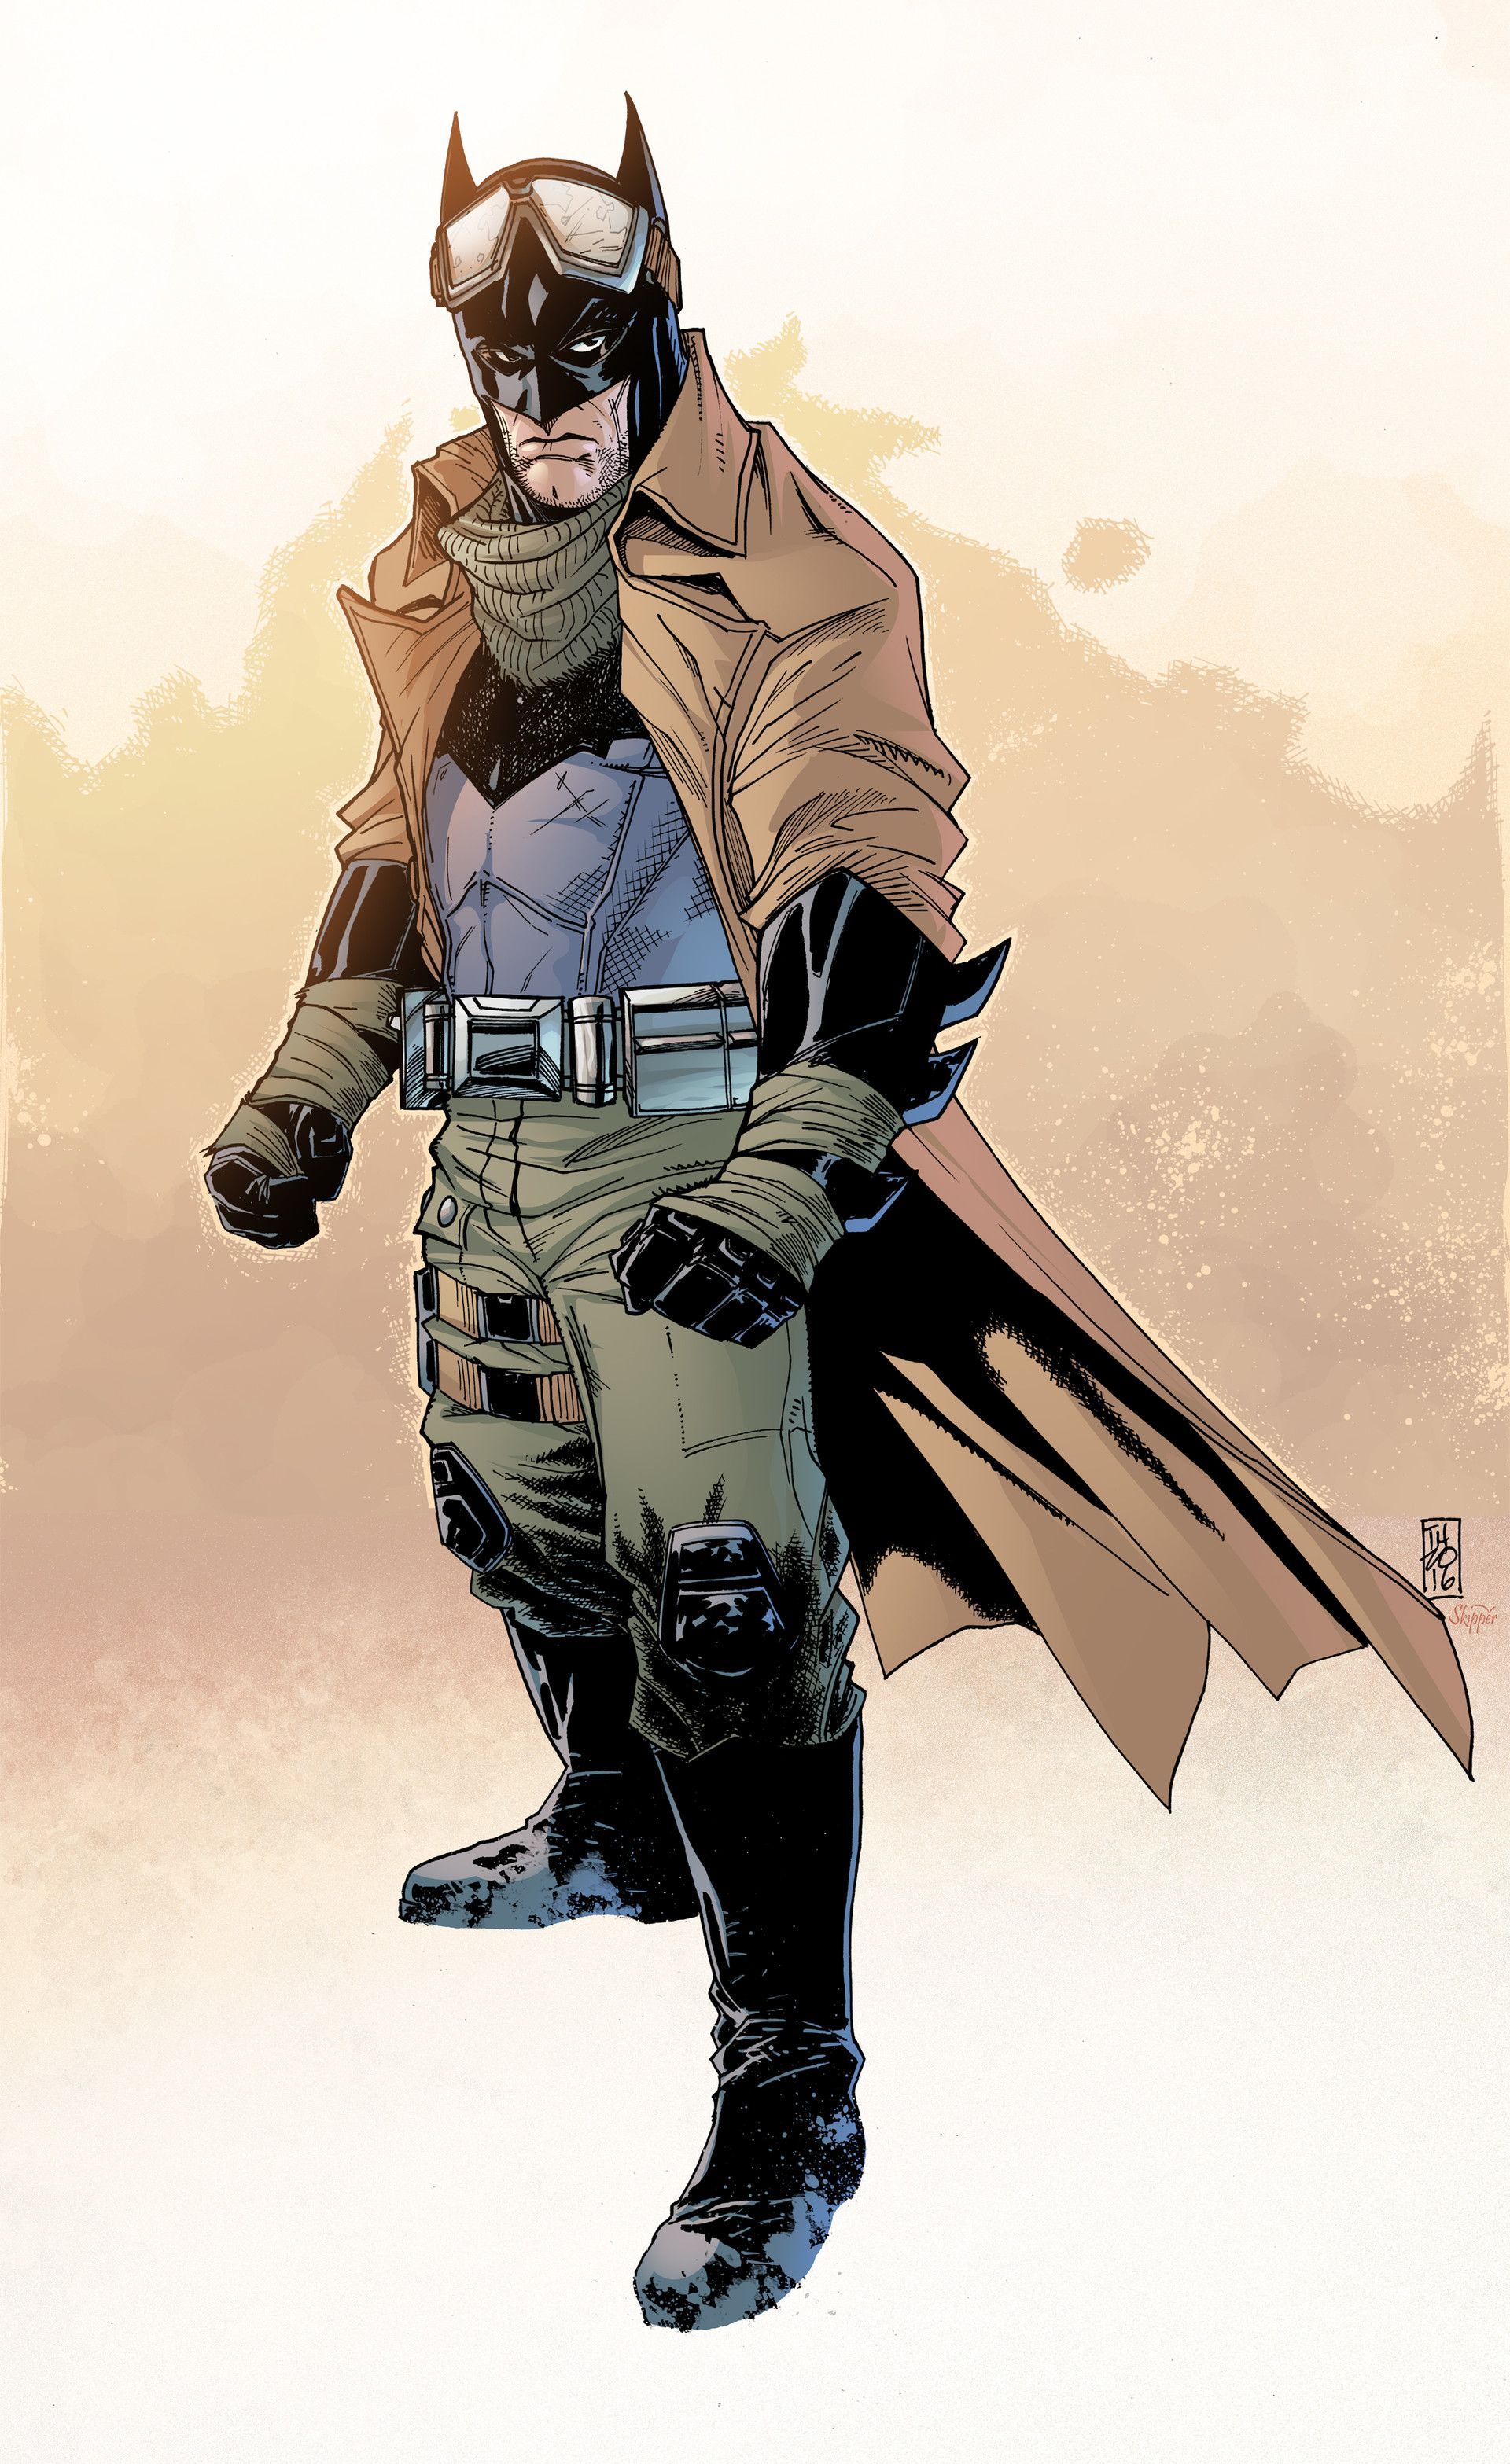 Knightmare Batman, Jeremiah Skipper. Batman art, Batman artwork, Batman comics